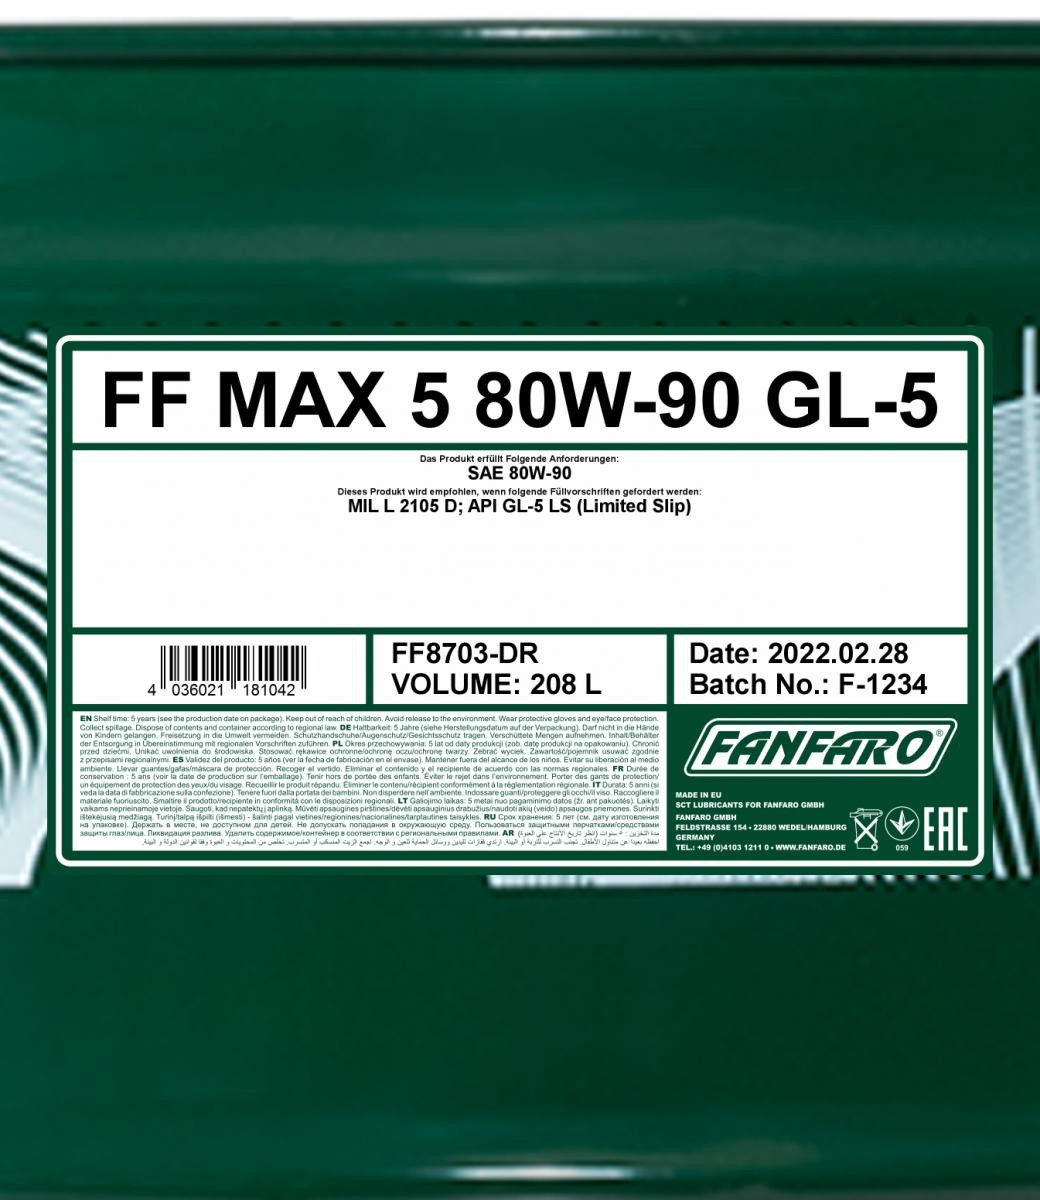 FANFARO Manual Transmission Oil FF8703-DR